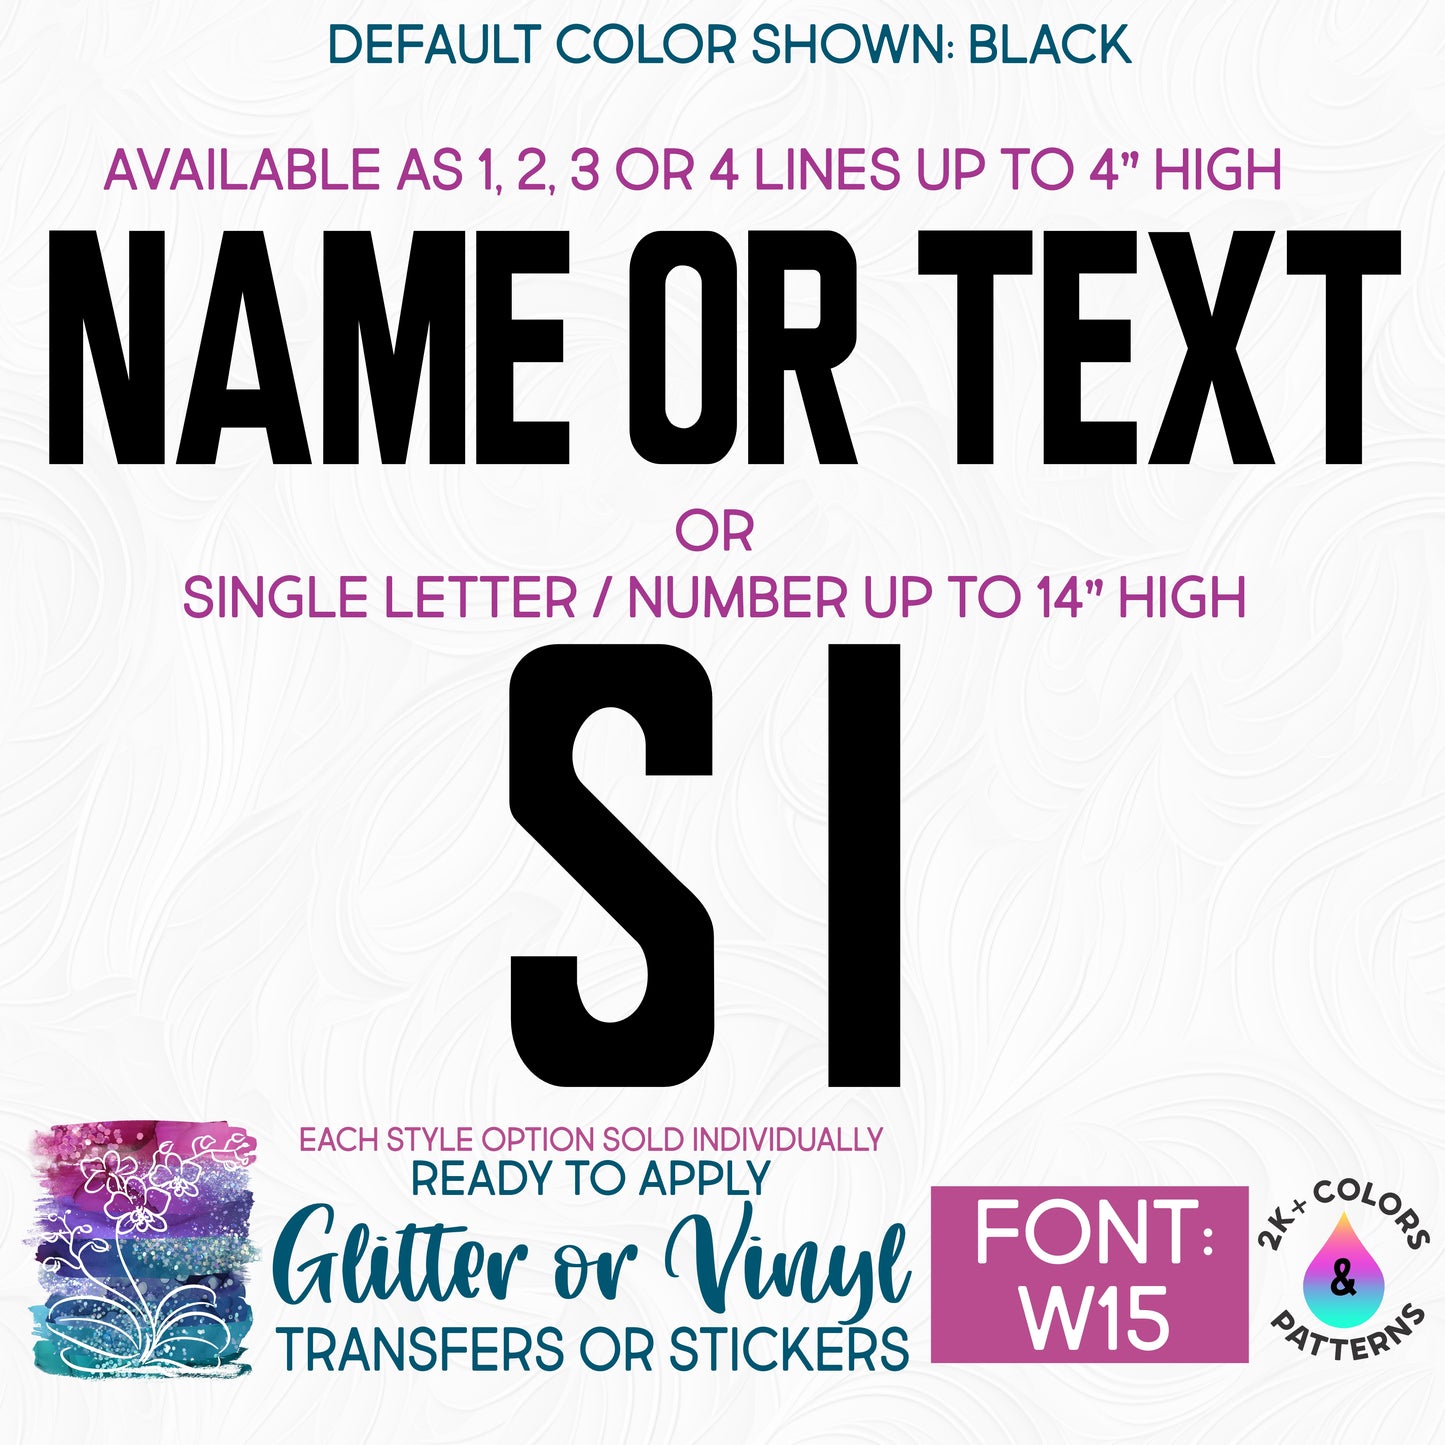 (s97-W15) Block Font Custom Name Text or Single Letter Number Glitter or Vinyl, Iron-On Transfer or Sticker